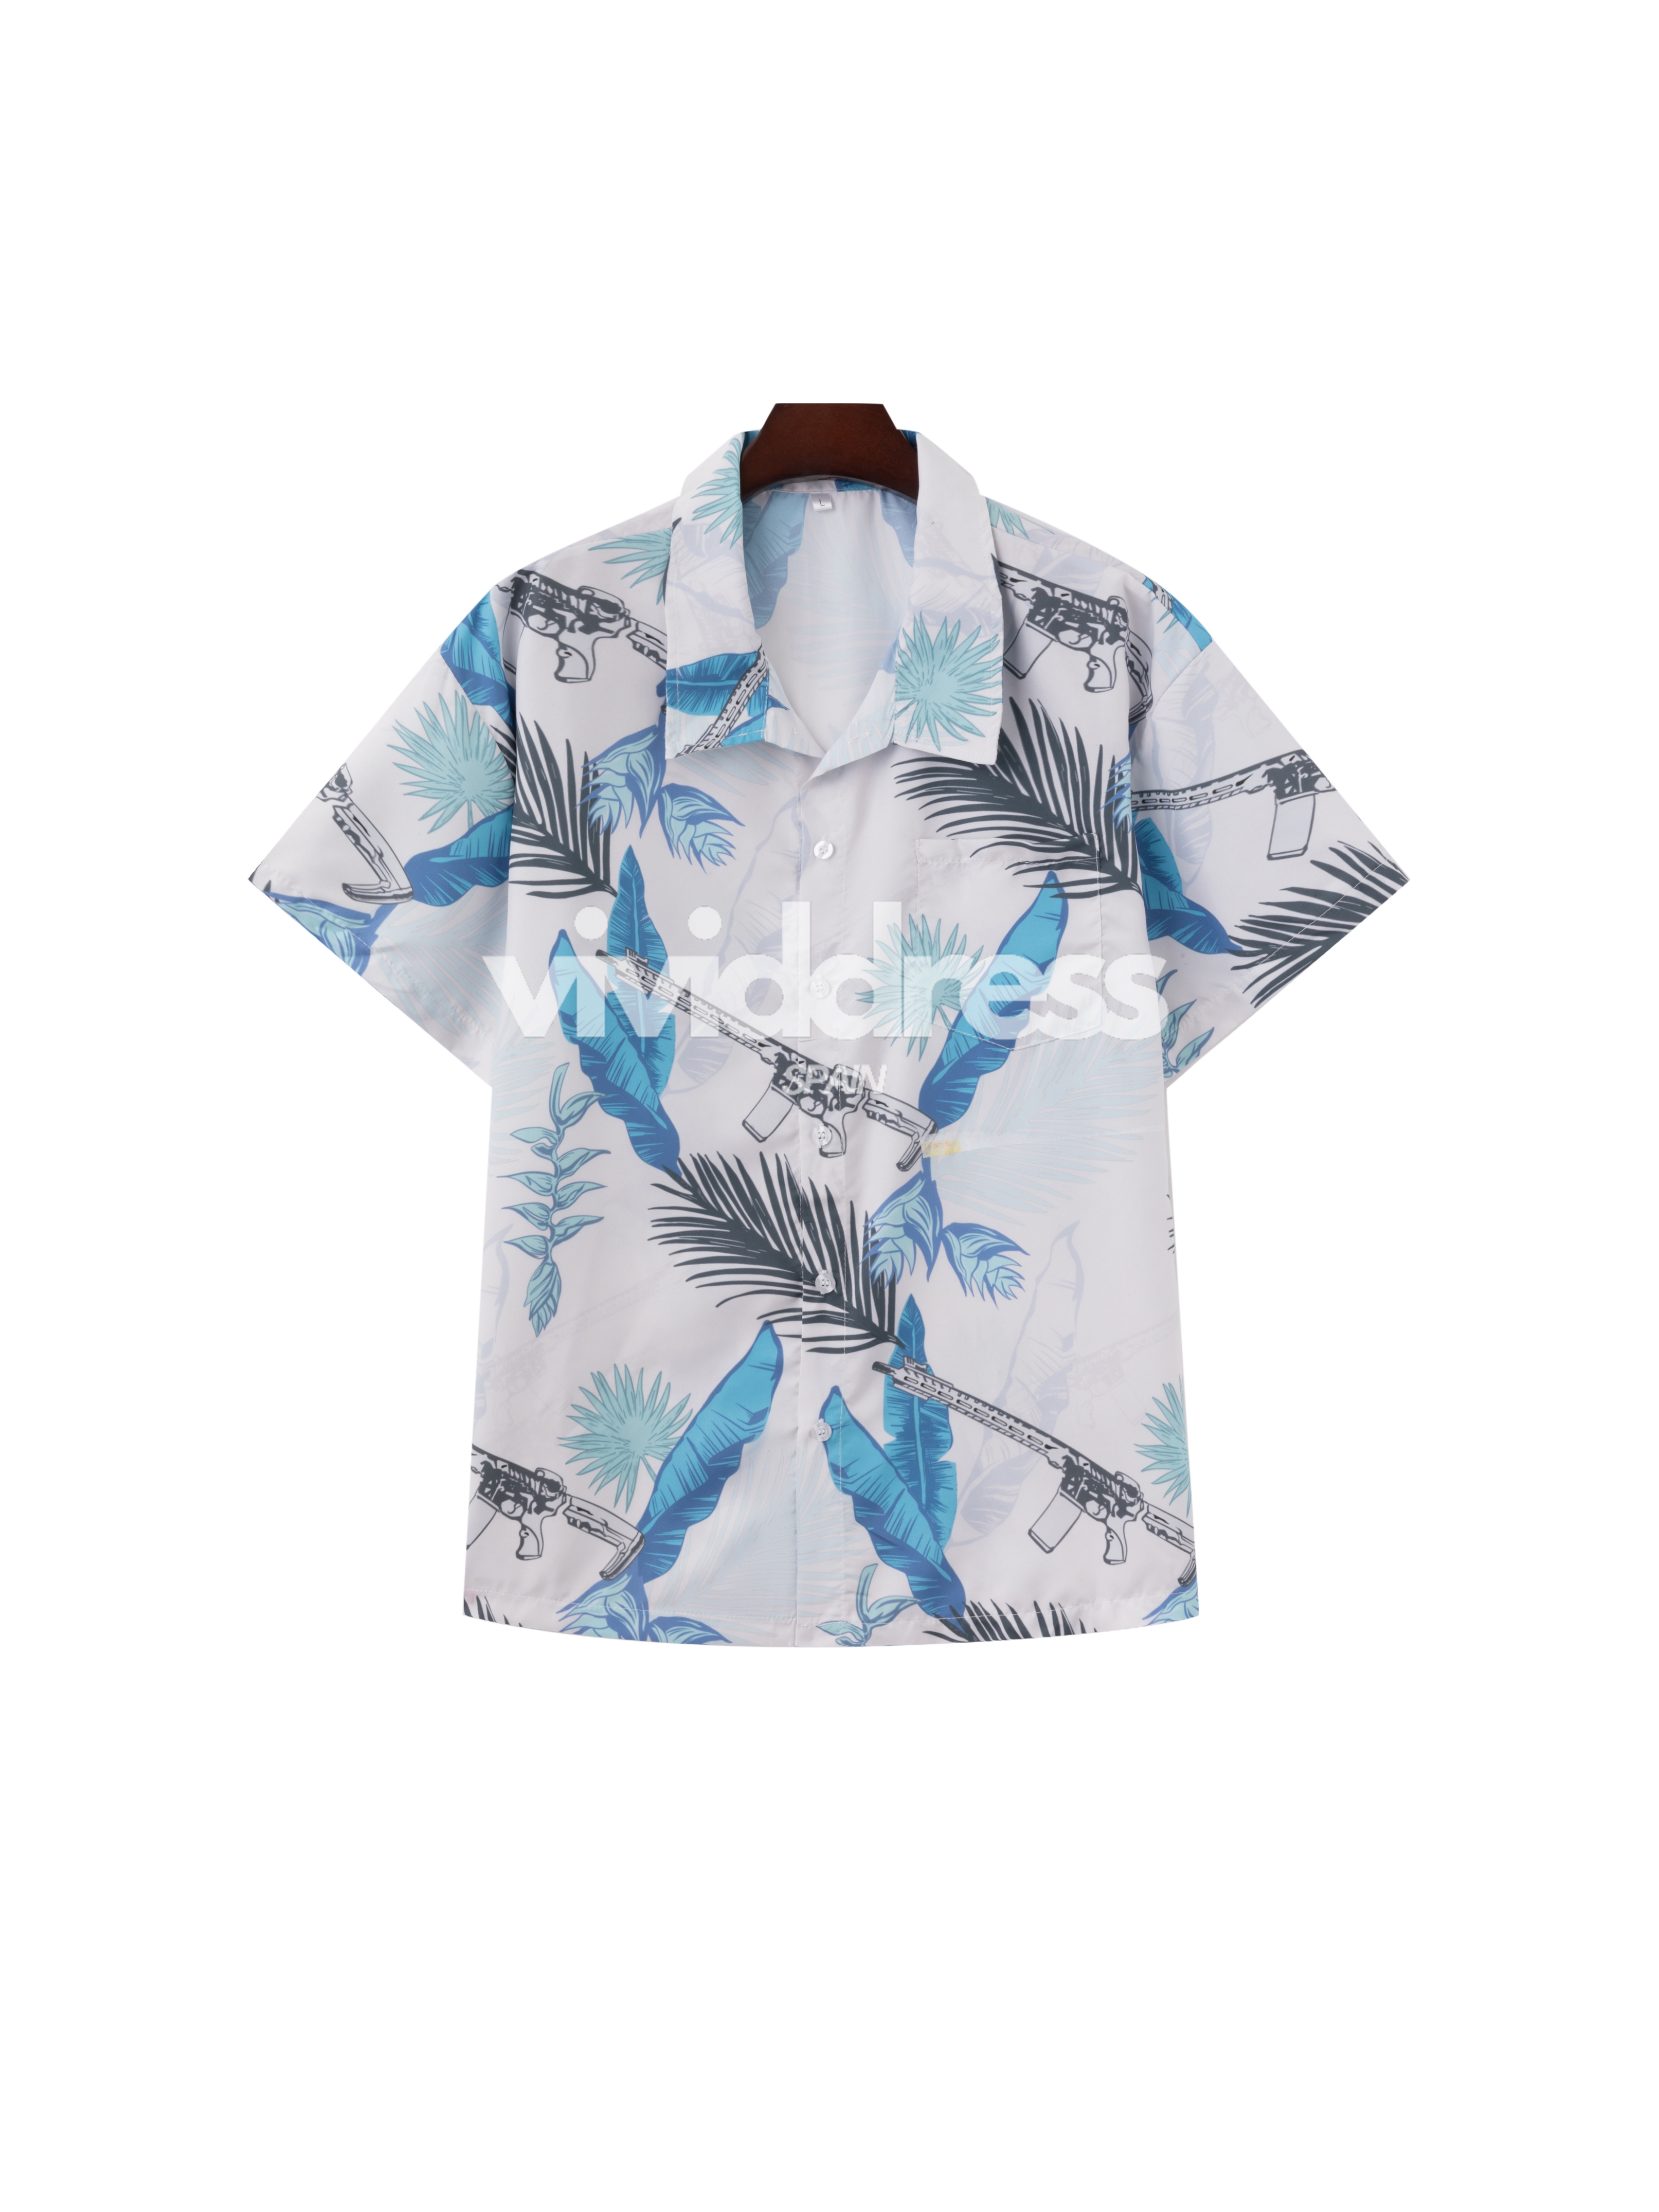 Men's Casual Gun & Feather Print Beach Hawaiian Holiday Short Sleeve Shirt